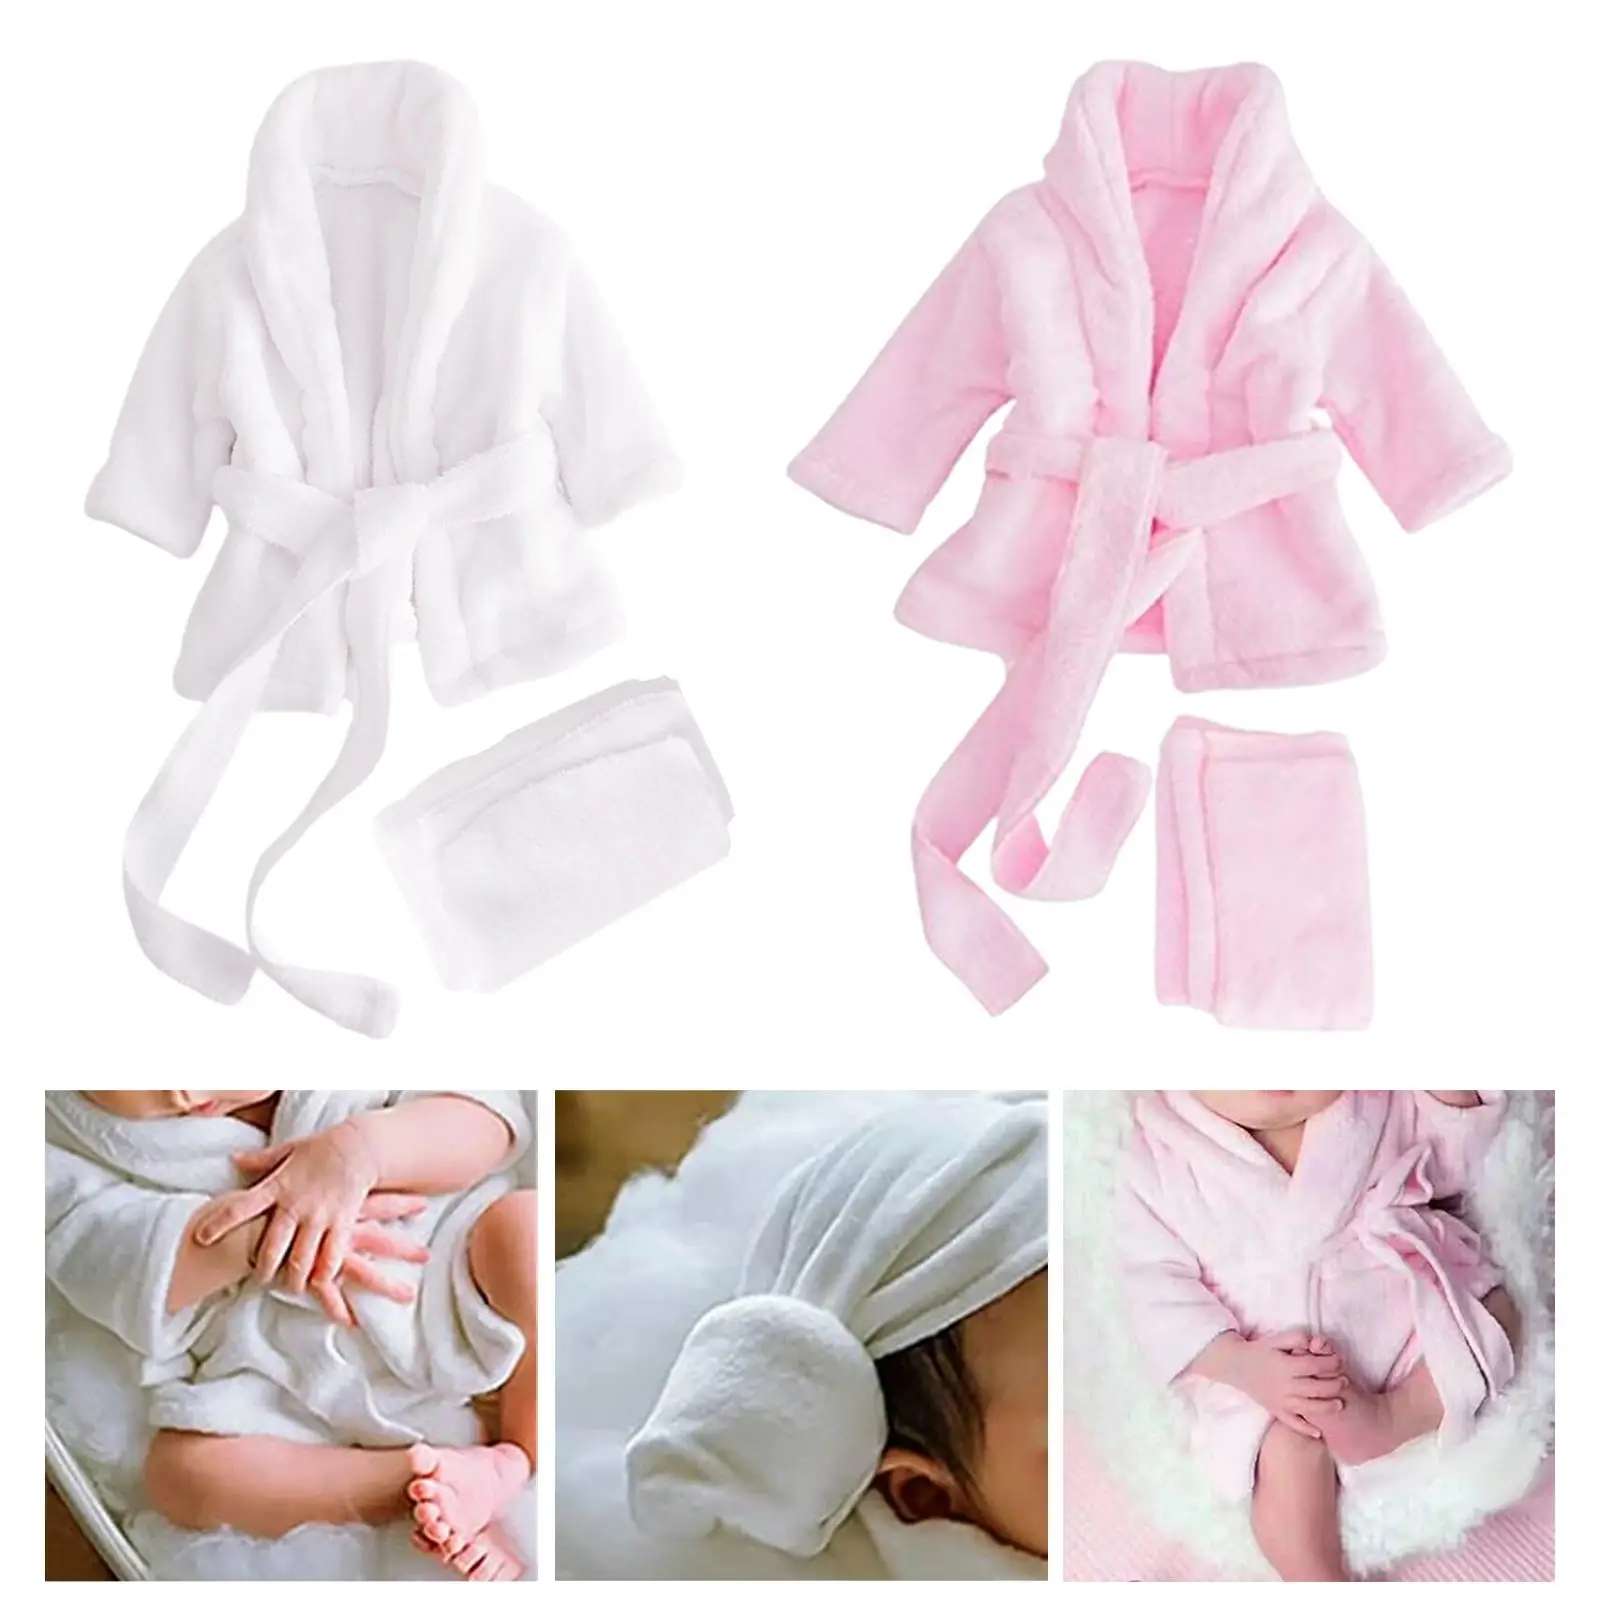 Photo Props Outfit Bathrobes Bathrobes Baby Towel Set Photo Prop